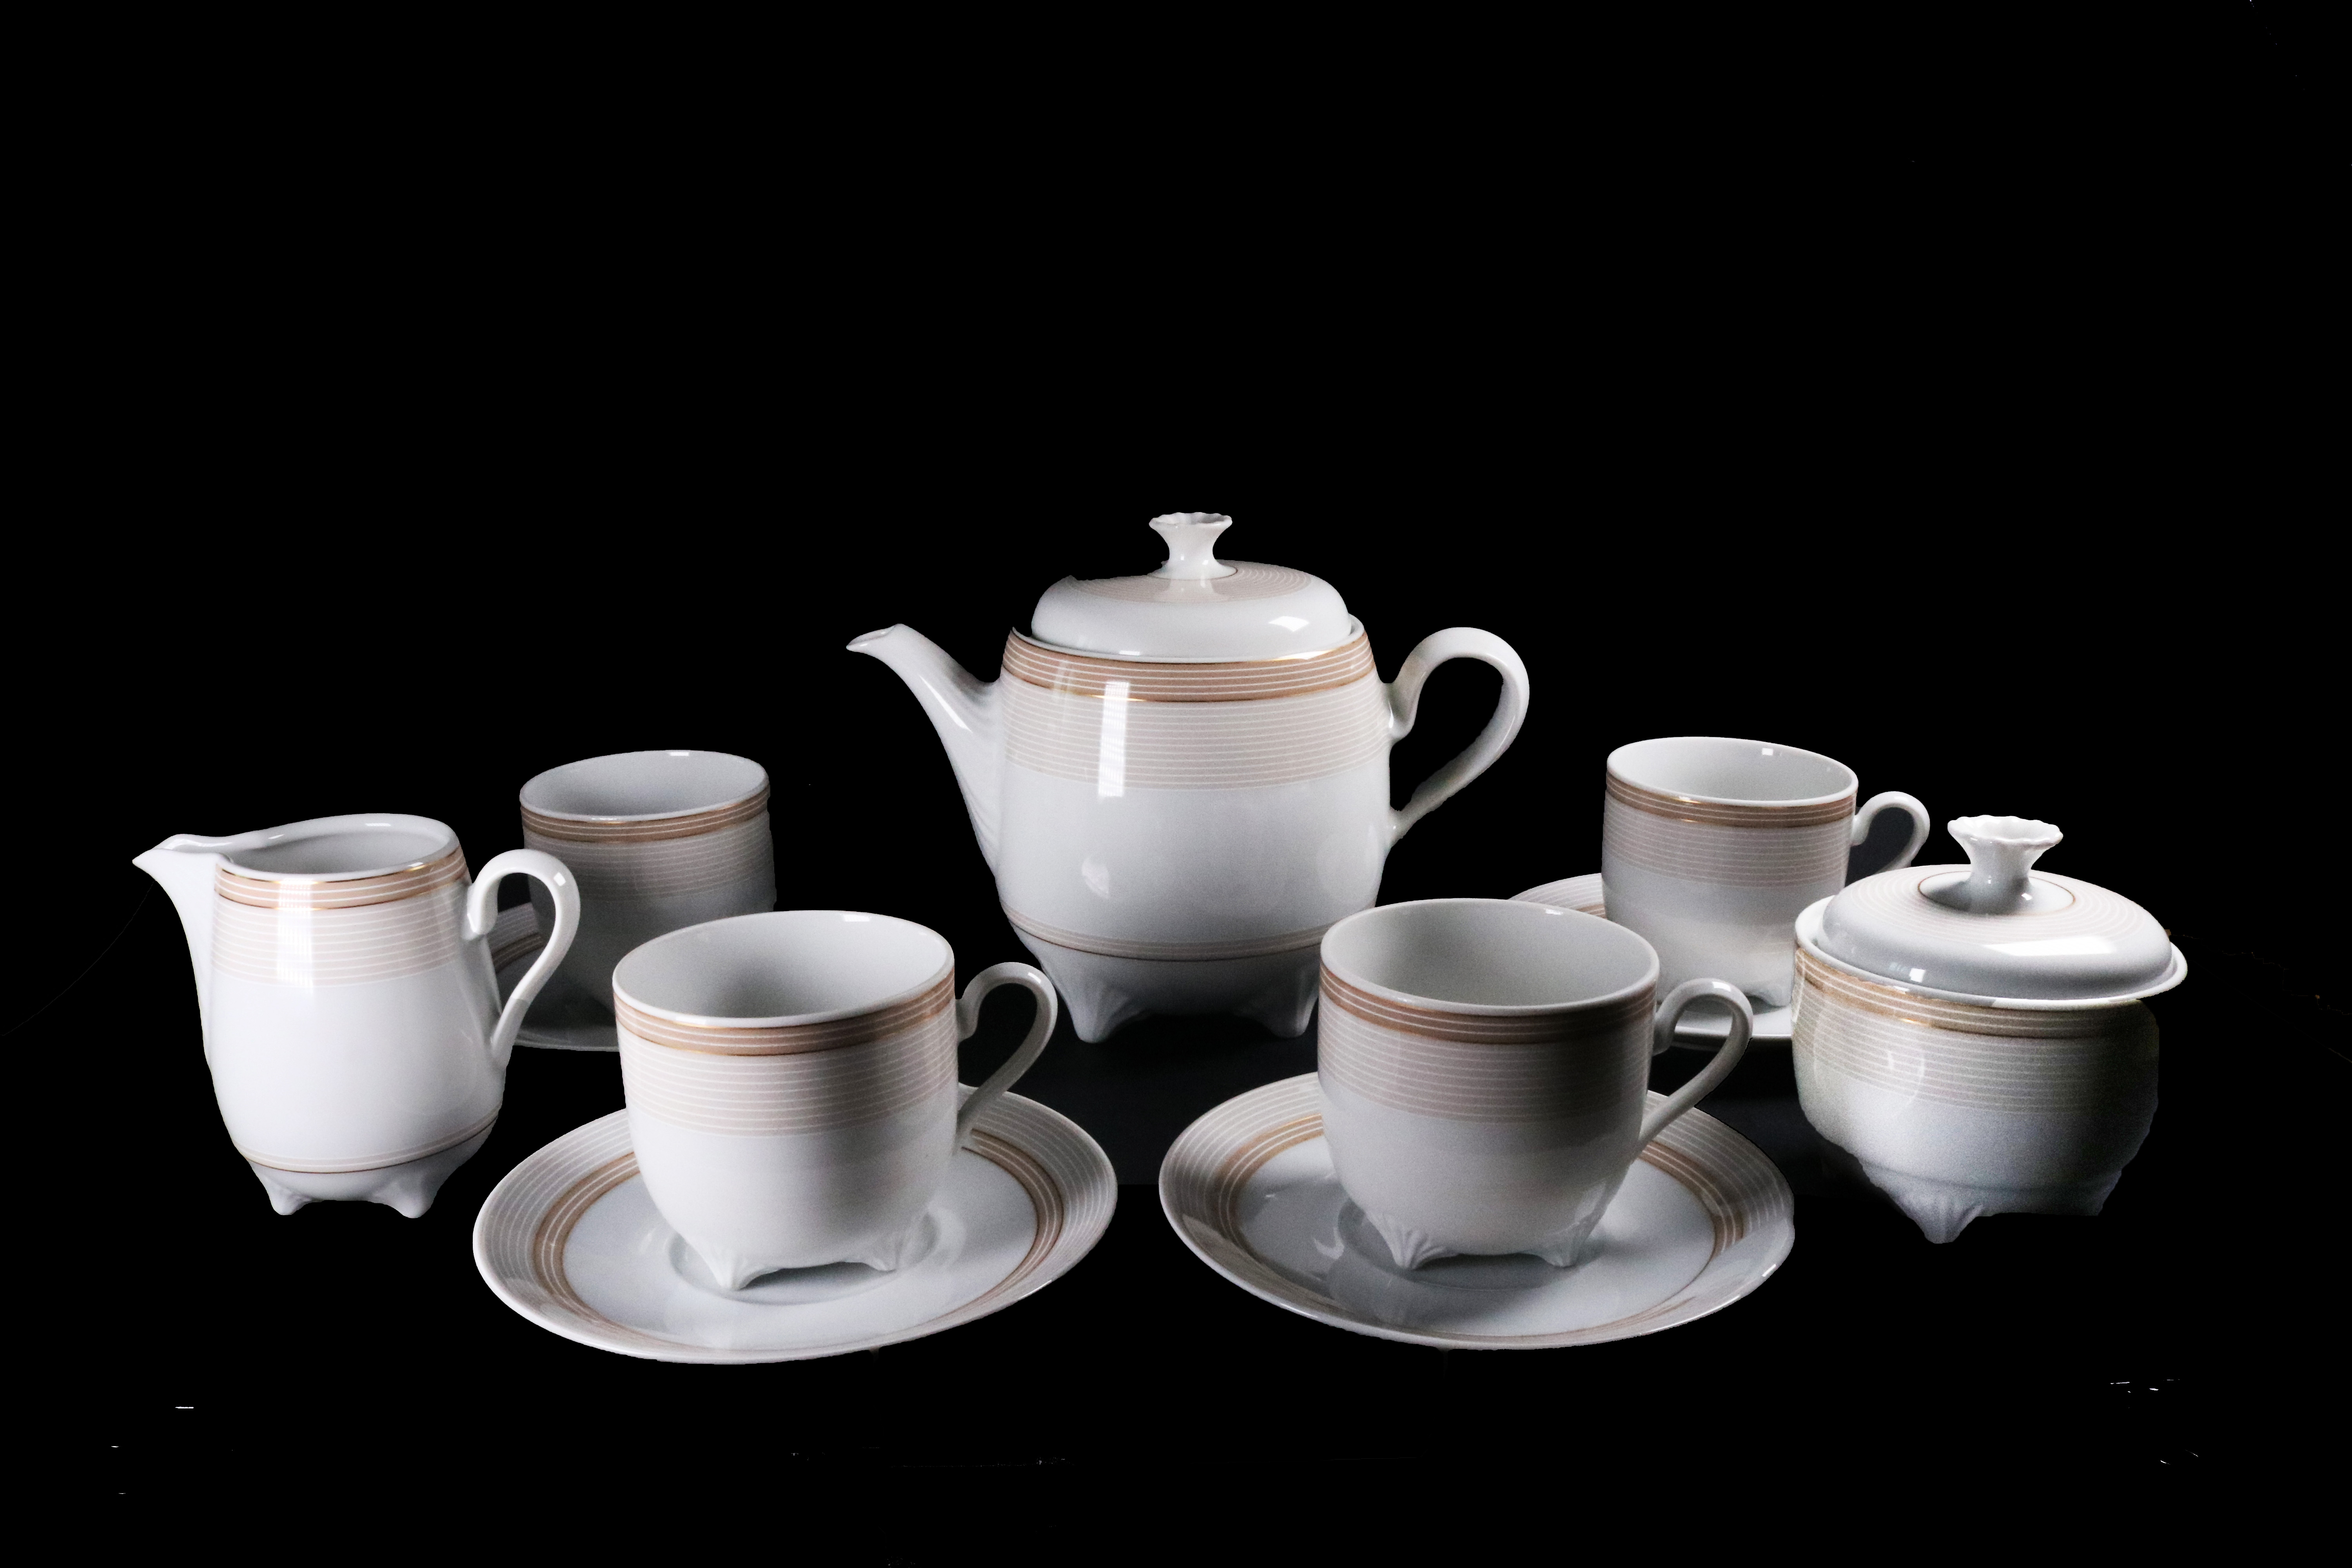 Tea/Coffee set Porcelain pcs.